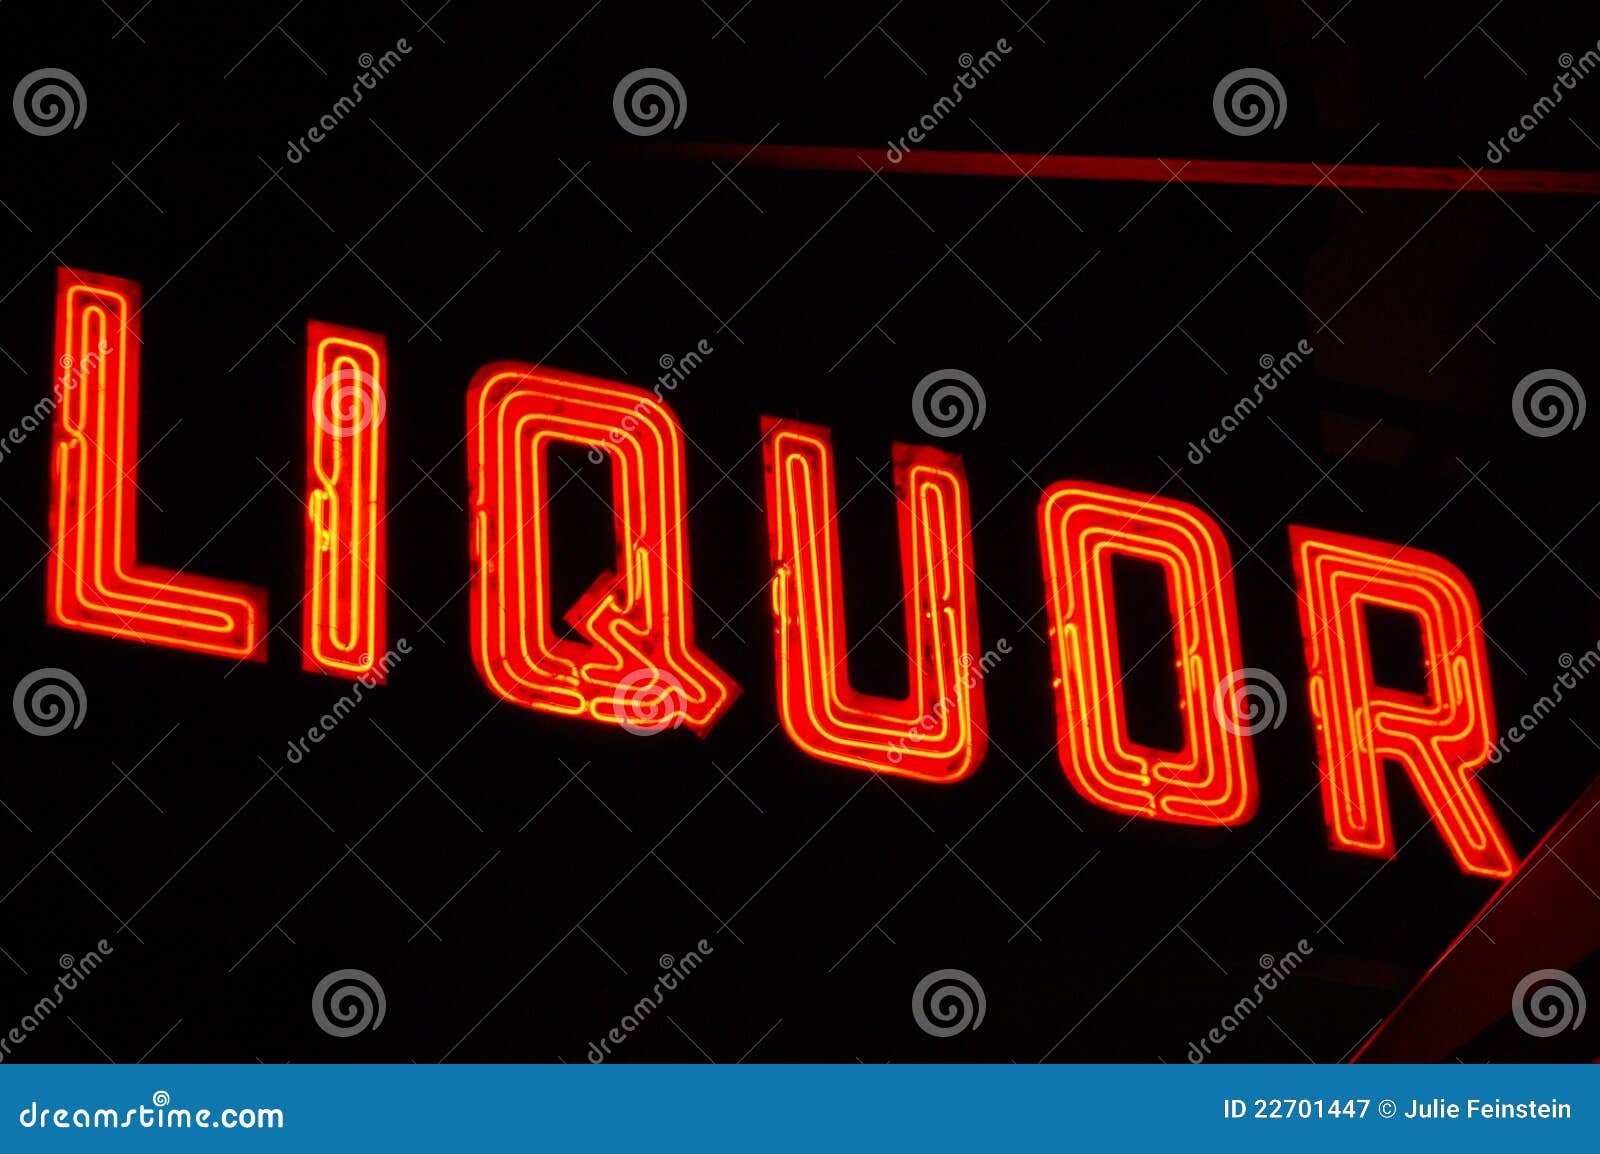 neon liquor sign